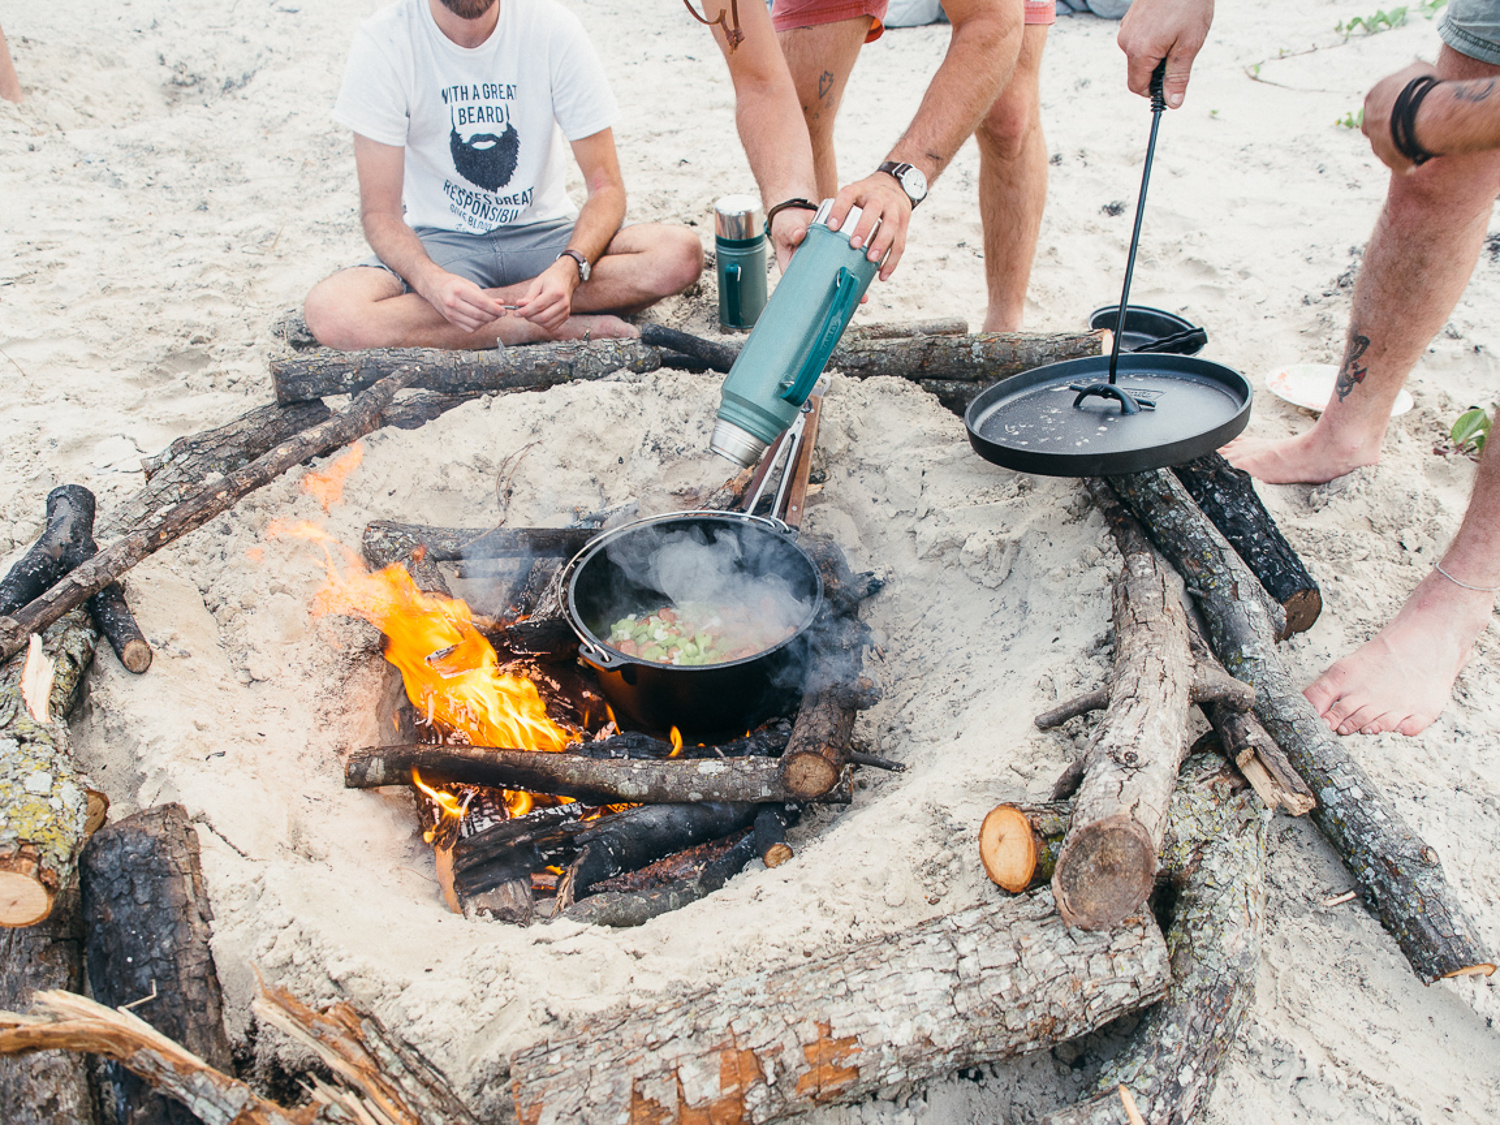 cooking jambalaya camp pawlowski america yall mustang island camping beach texas (8 of 21).jpg